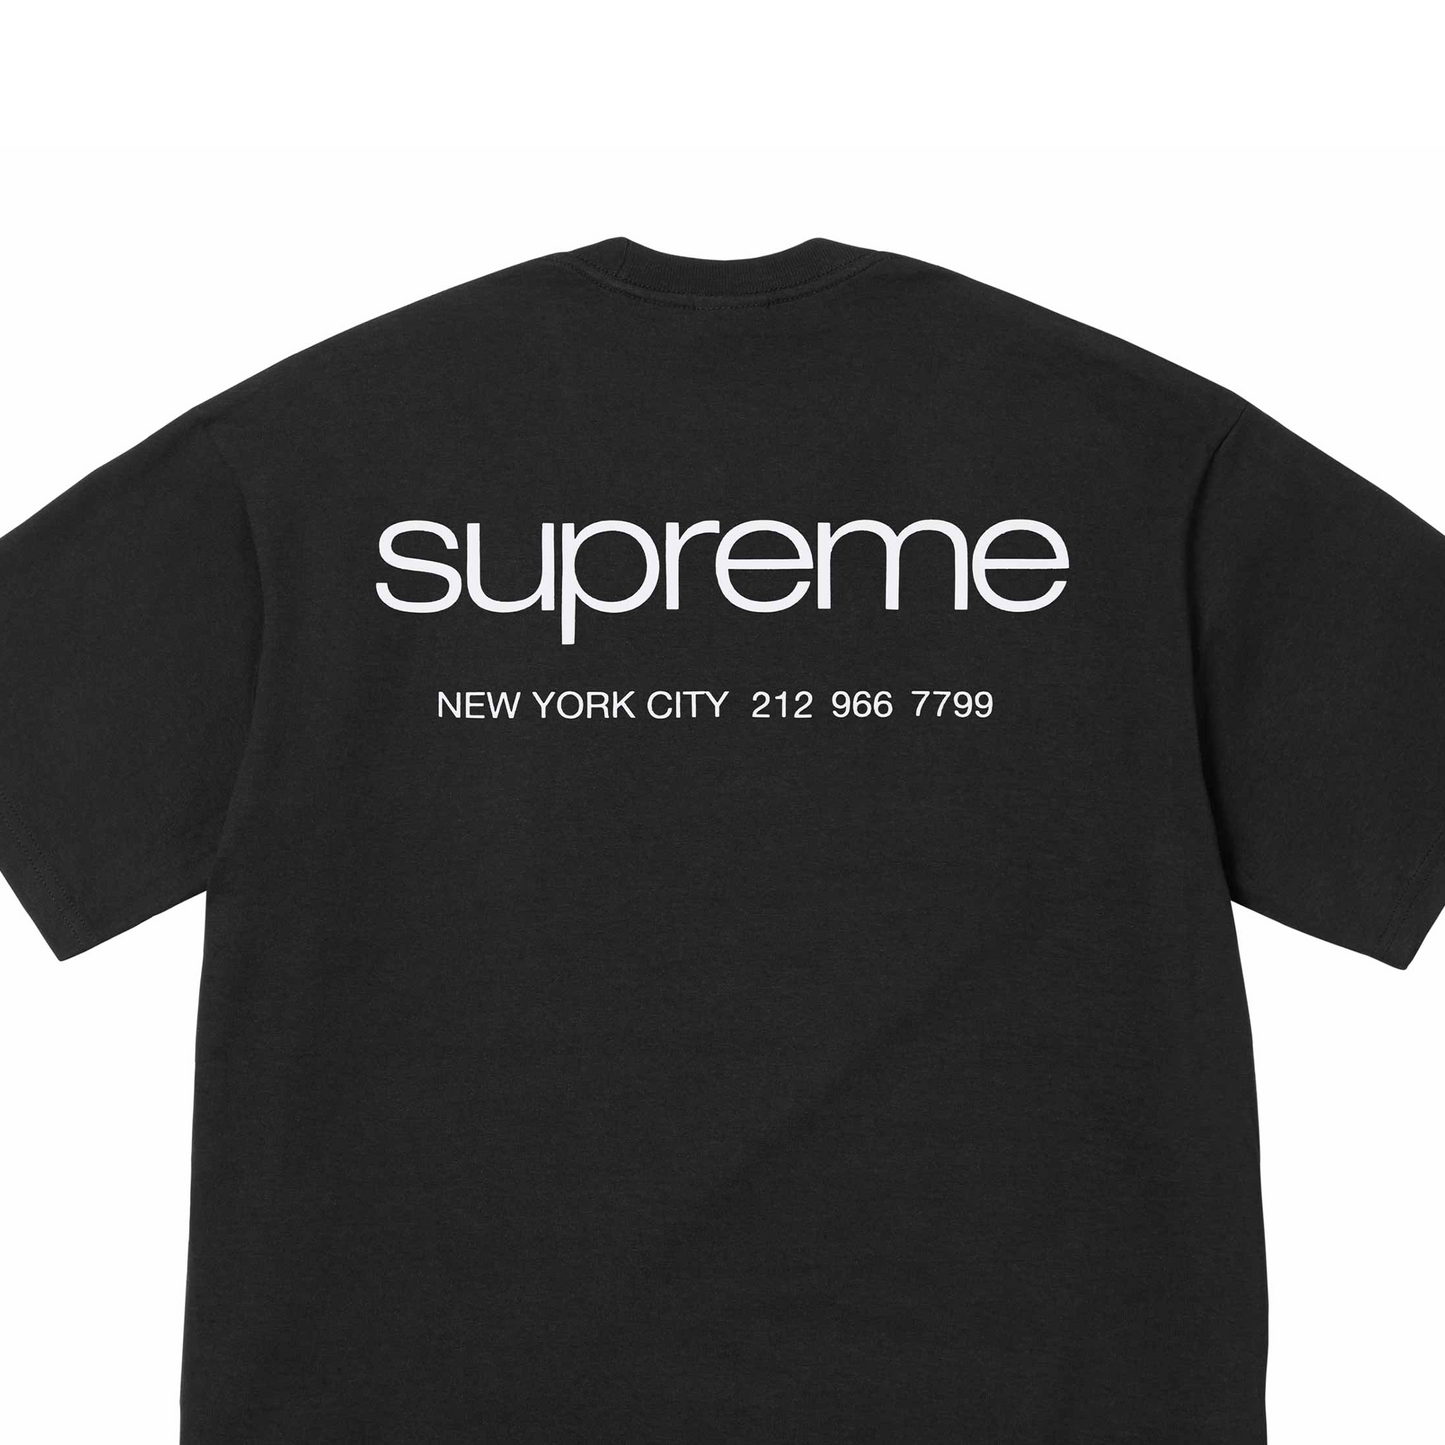 Supreme NYC Tee Black